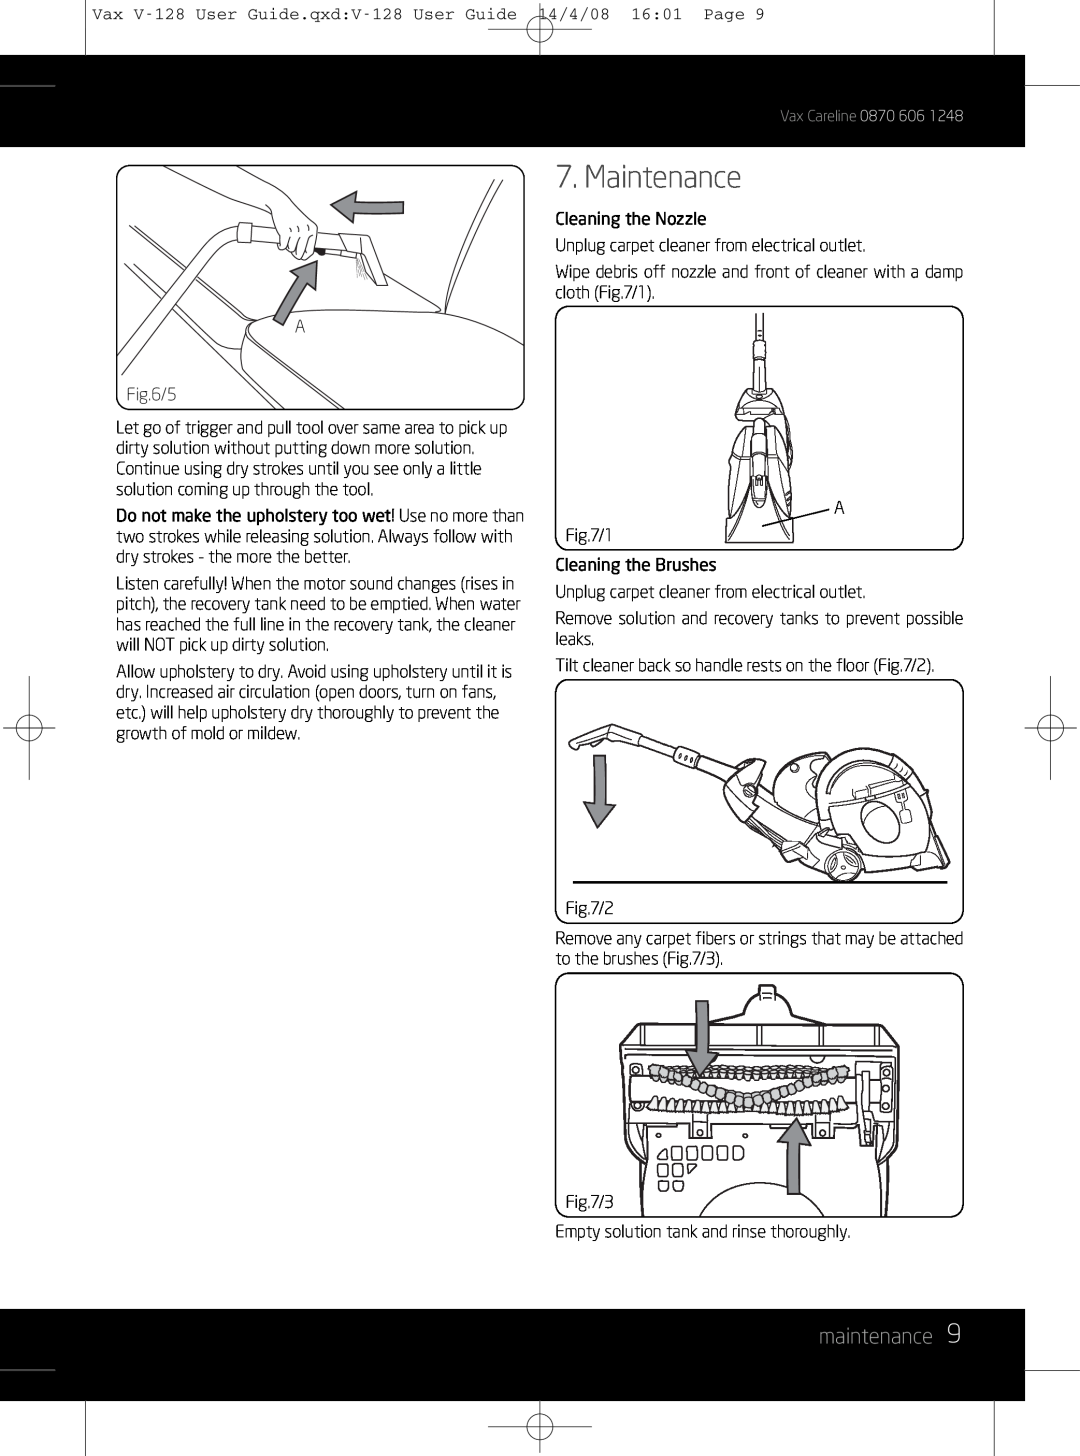 Vizio V-128 instruction manual Maintenance, maintenance 